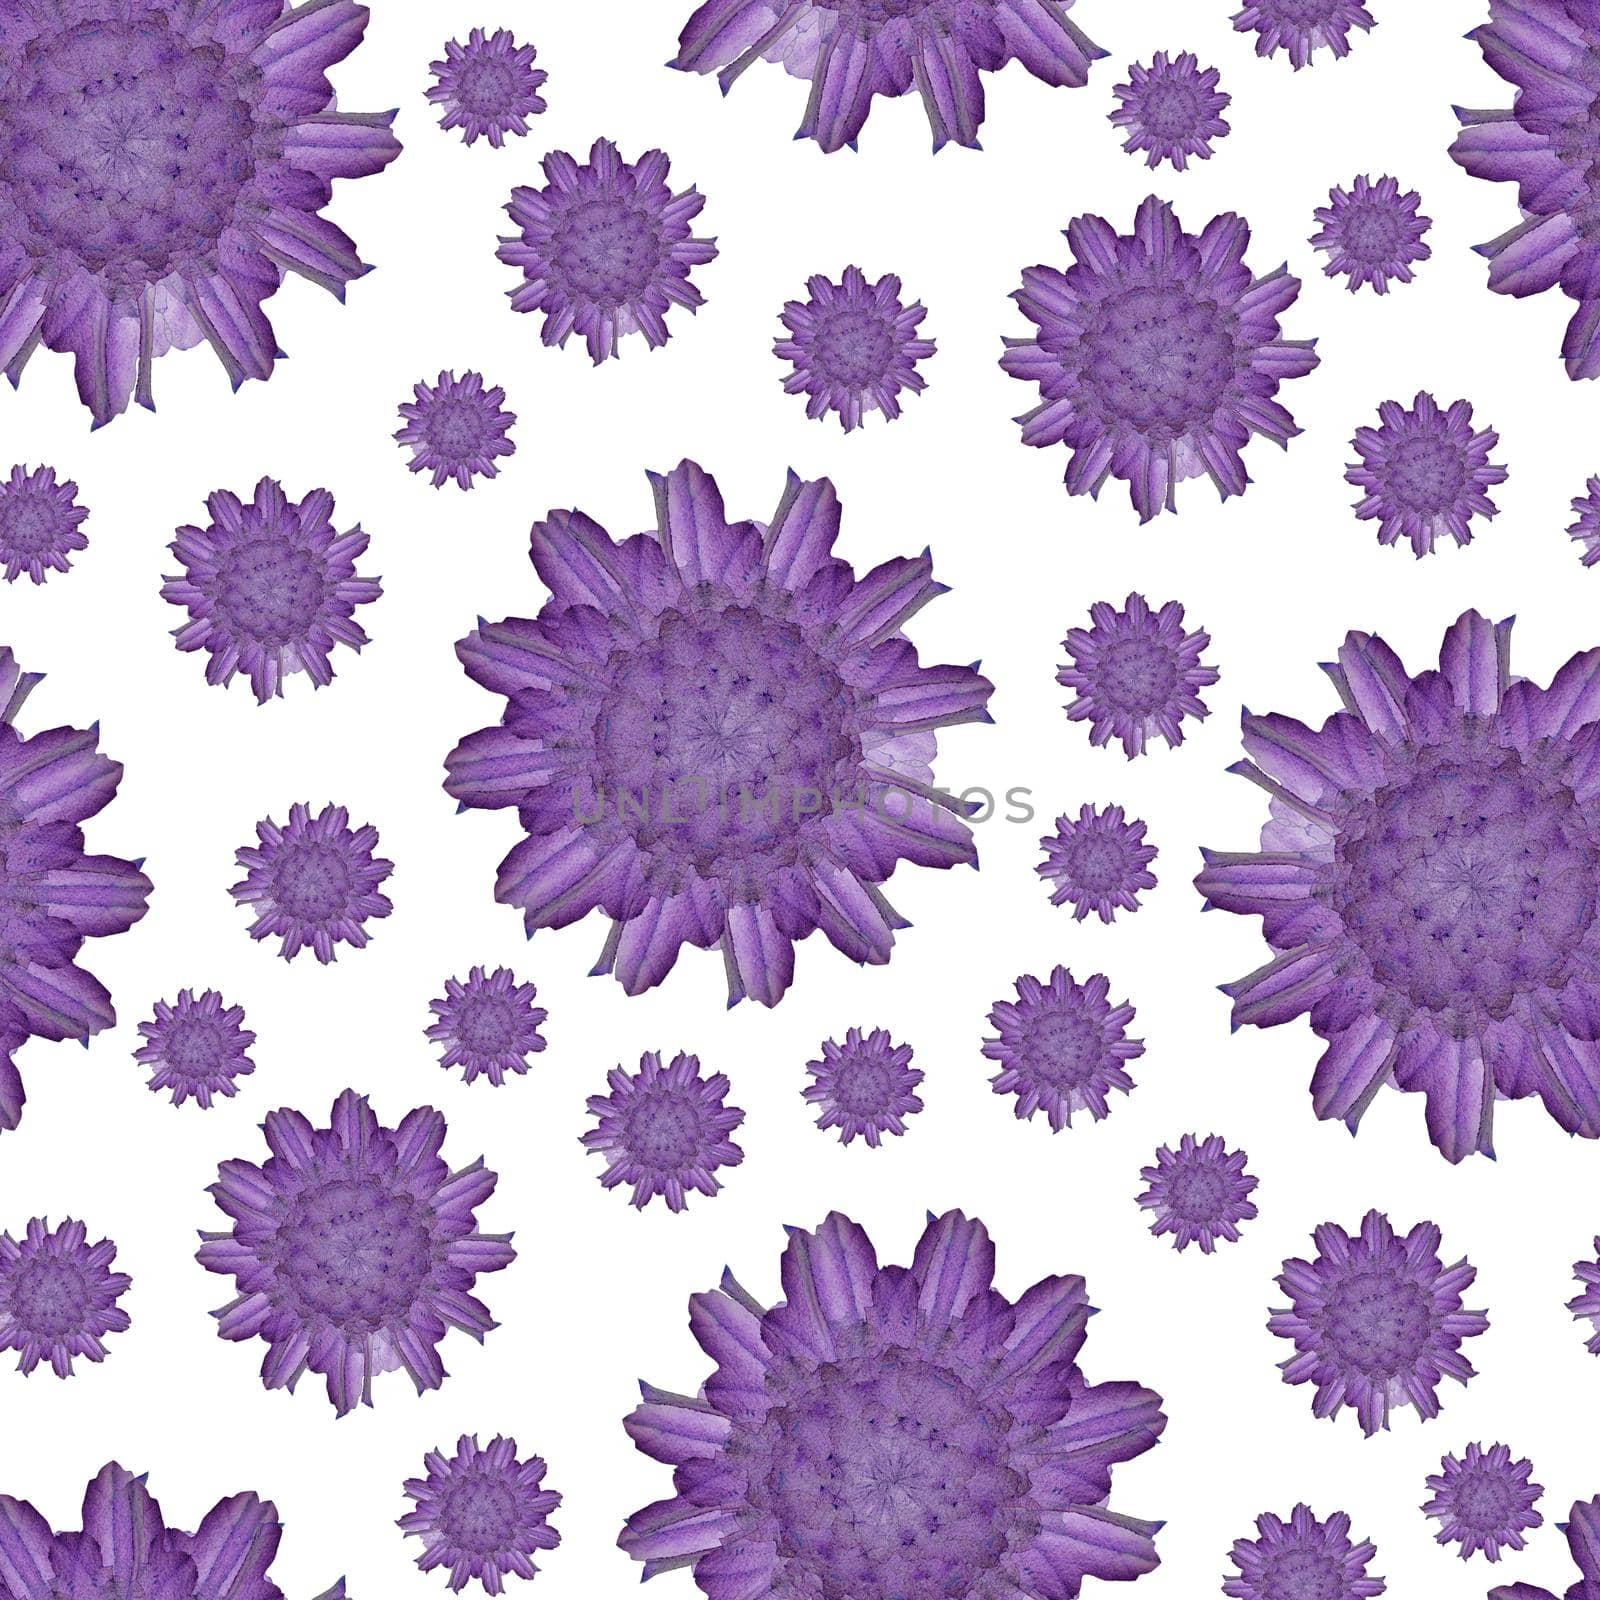 Floral Repeat Pattern. Violet Flower on White Background. by Rina_Dozornaya